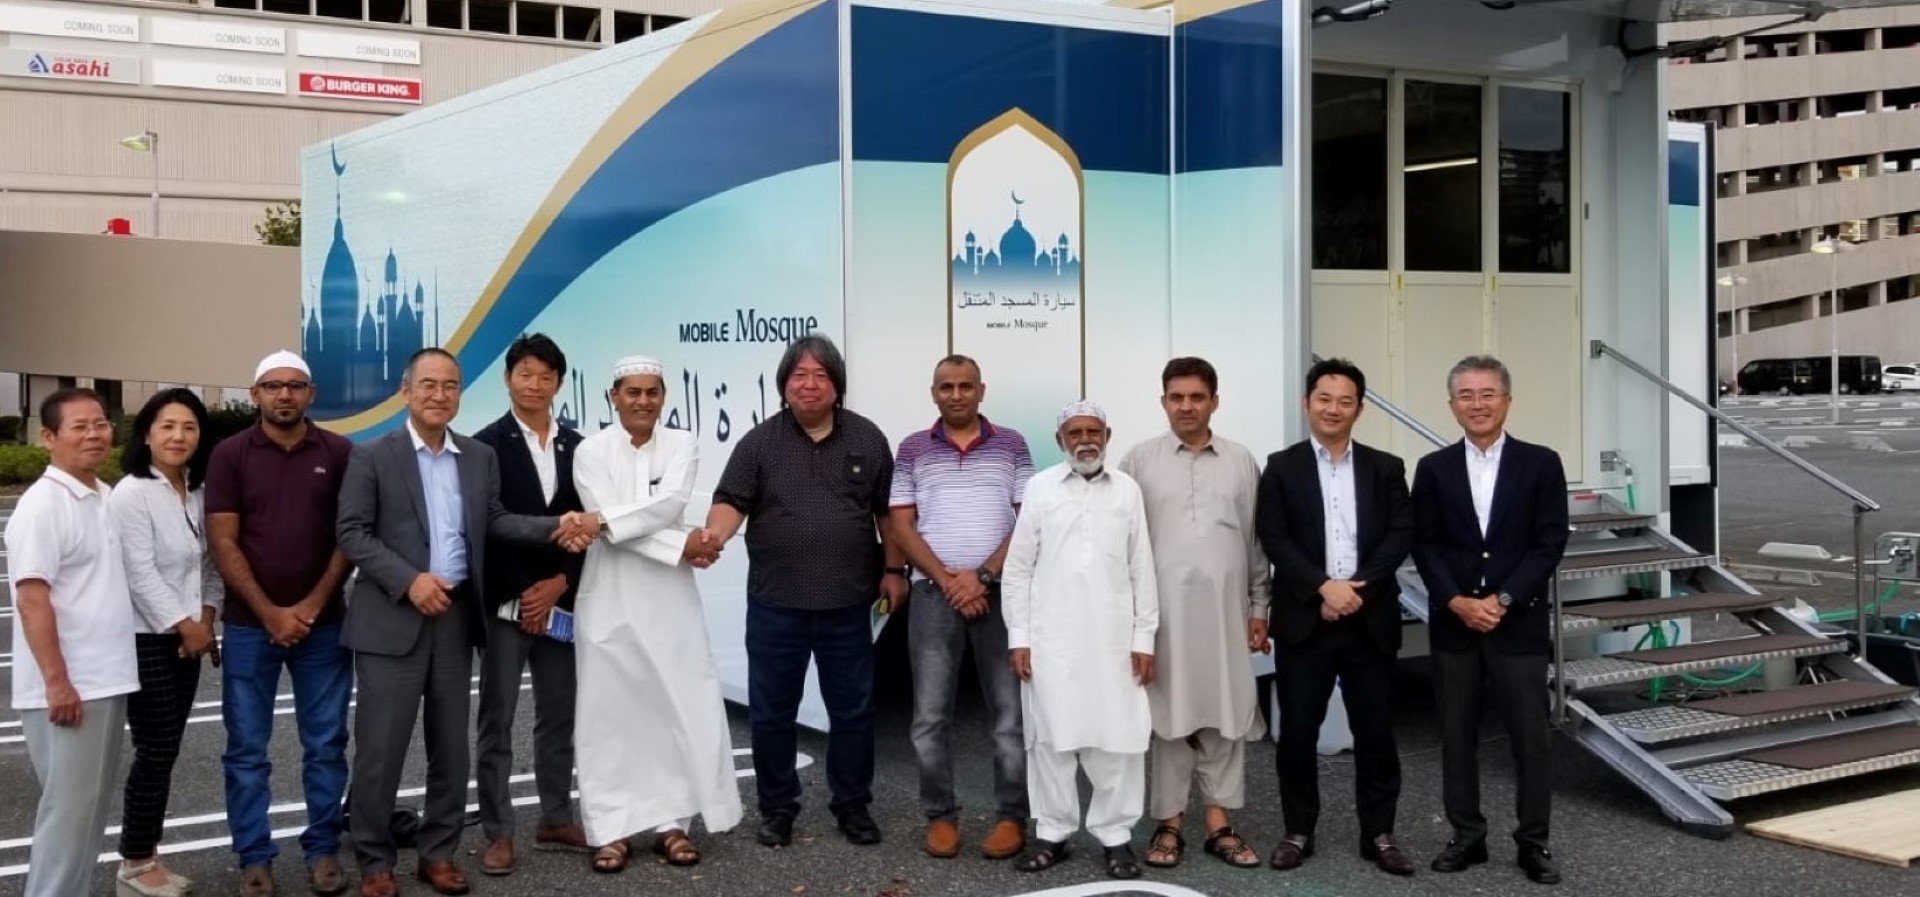 Mobile Mosque exhibition was held in Urayasu Chiba Japan Sep Mr. Saleem Sandha participated as a Muslim advisor.